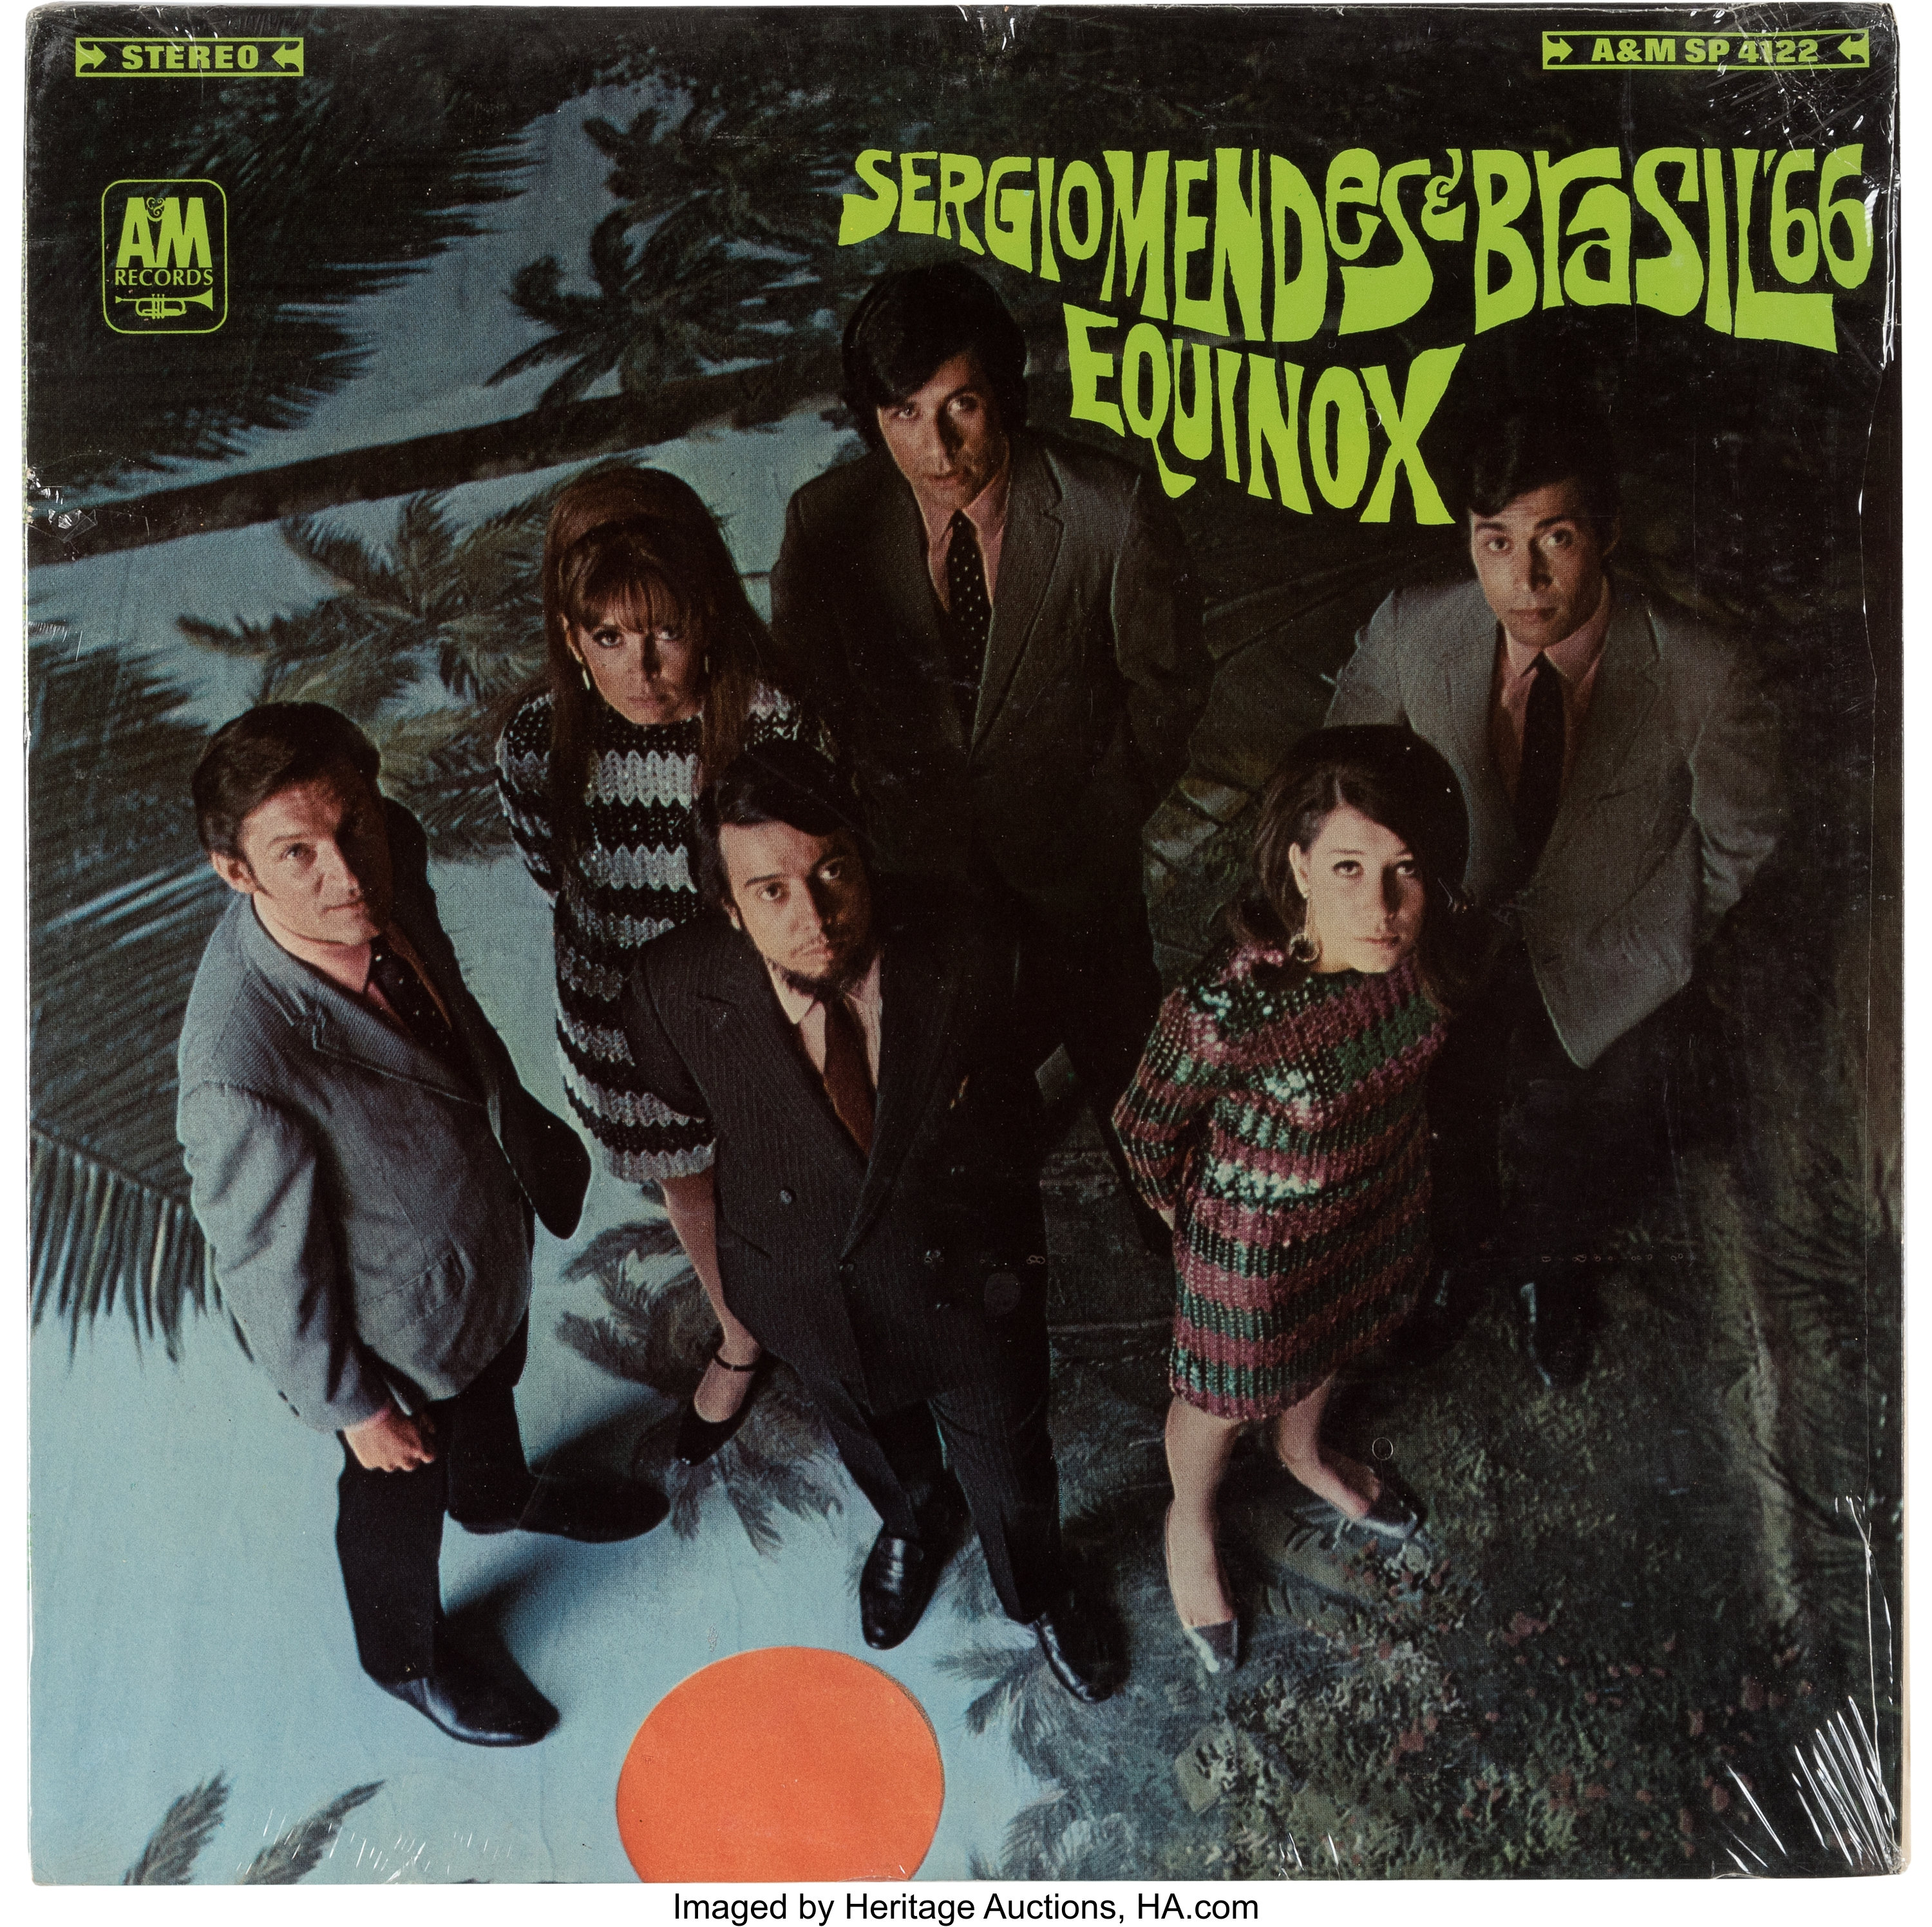 Vinyl: Sérgio Mendes & Brasil '66 Equinox (A&M SP 4122, 1967